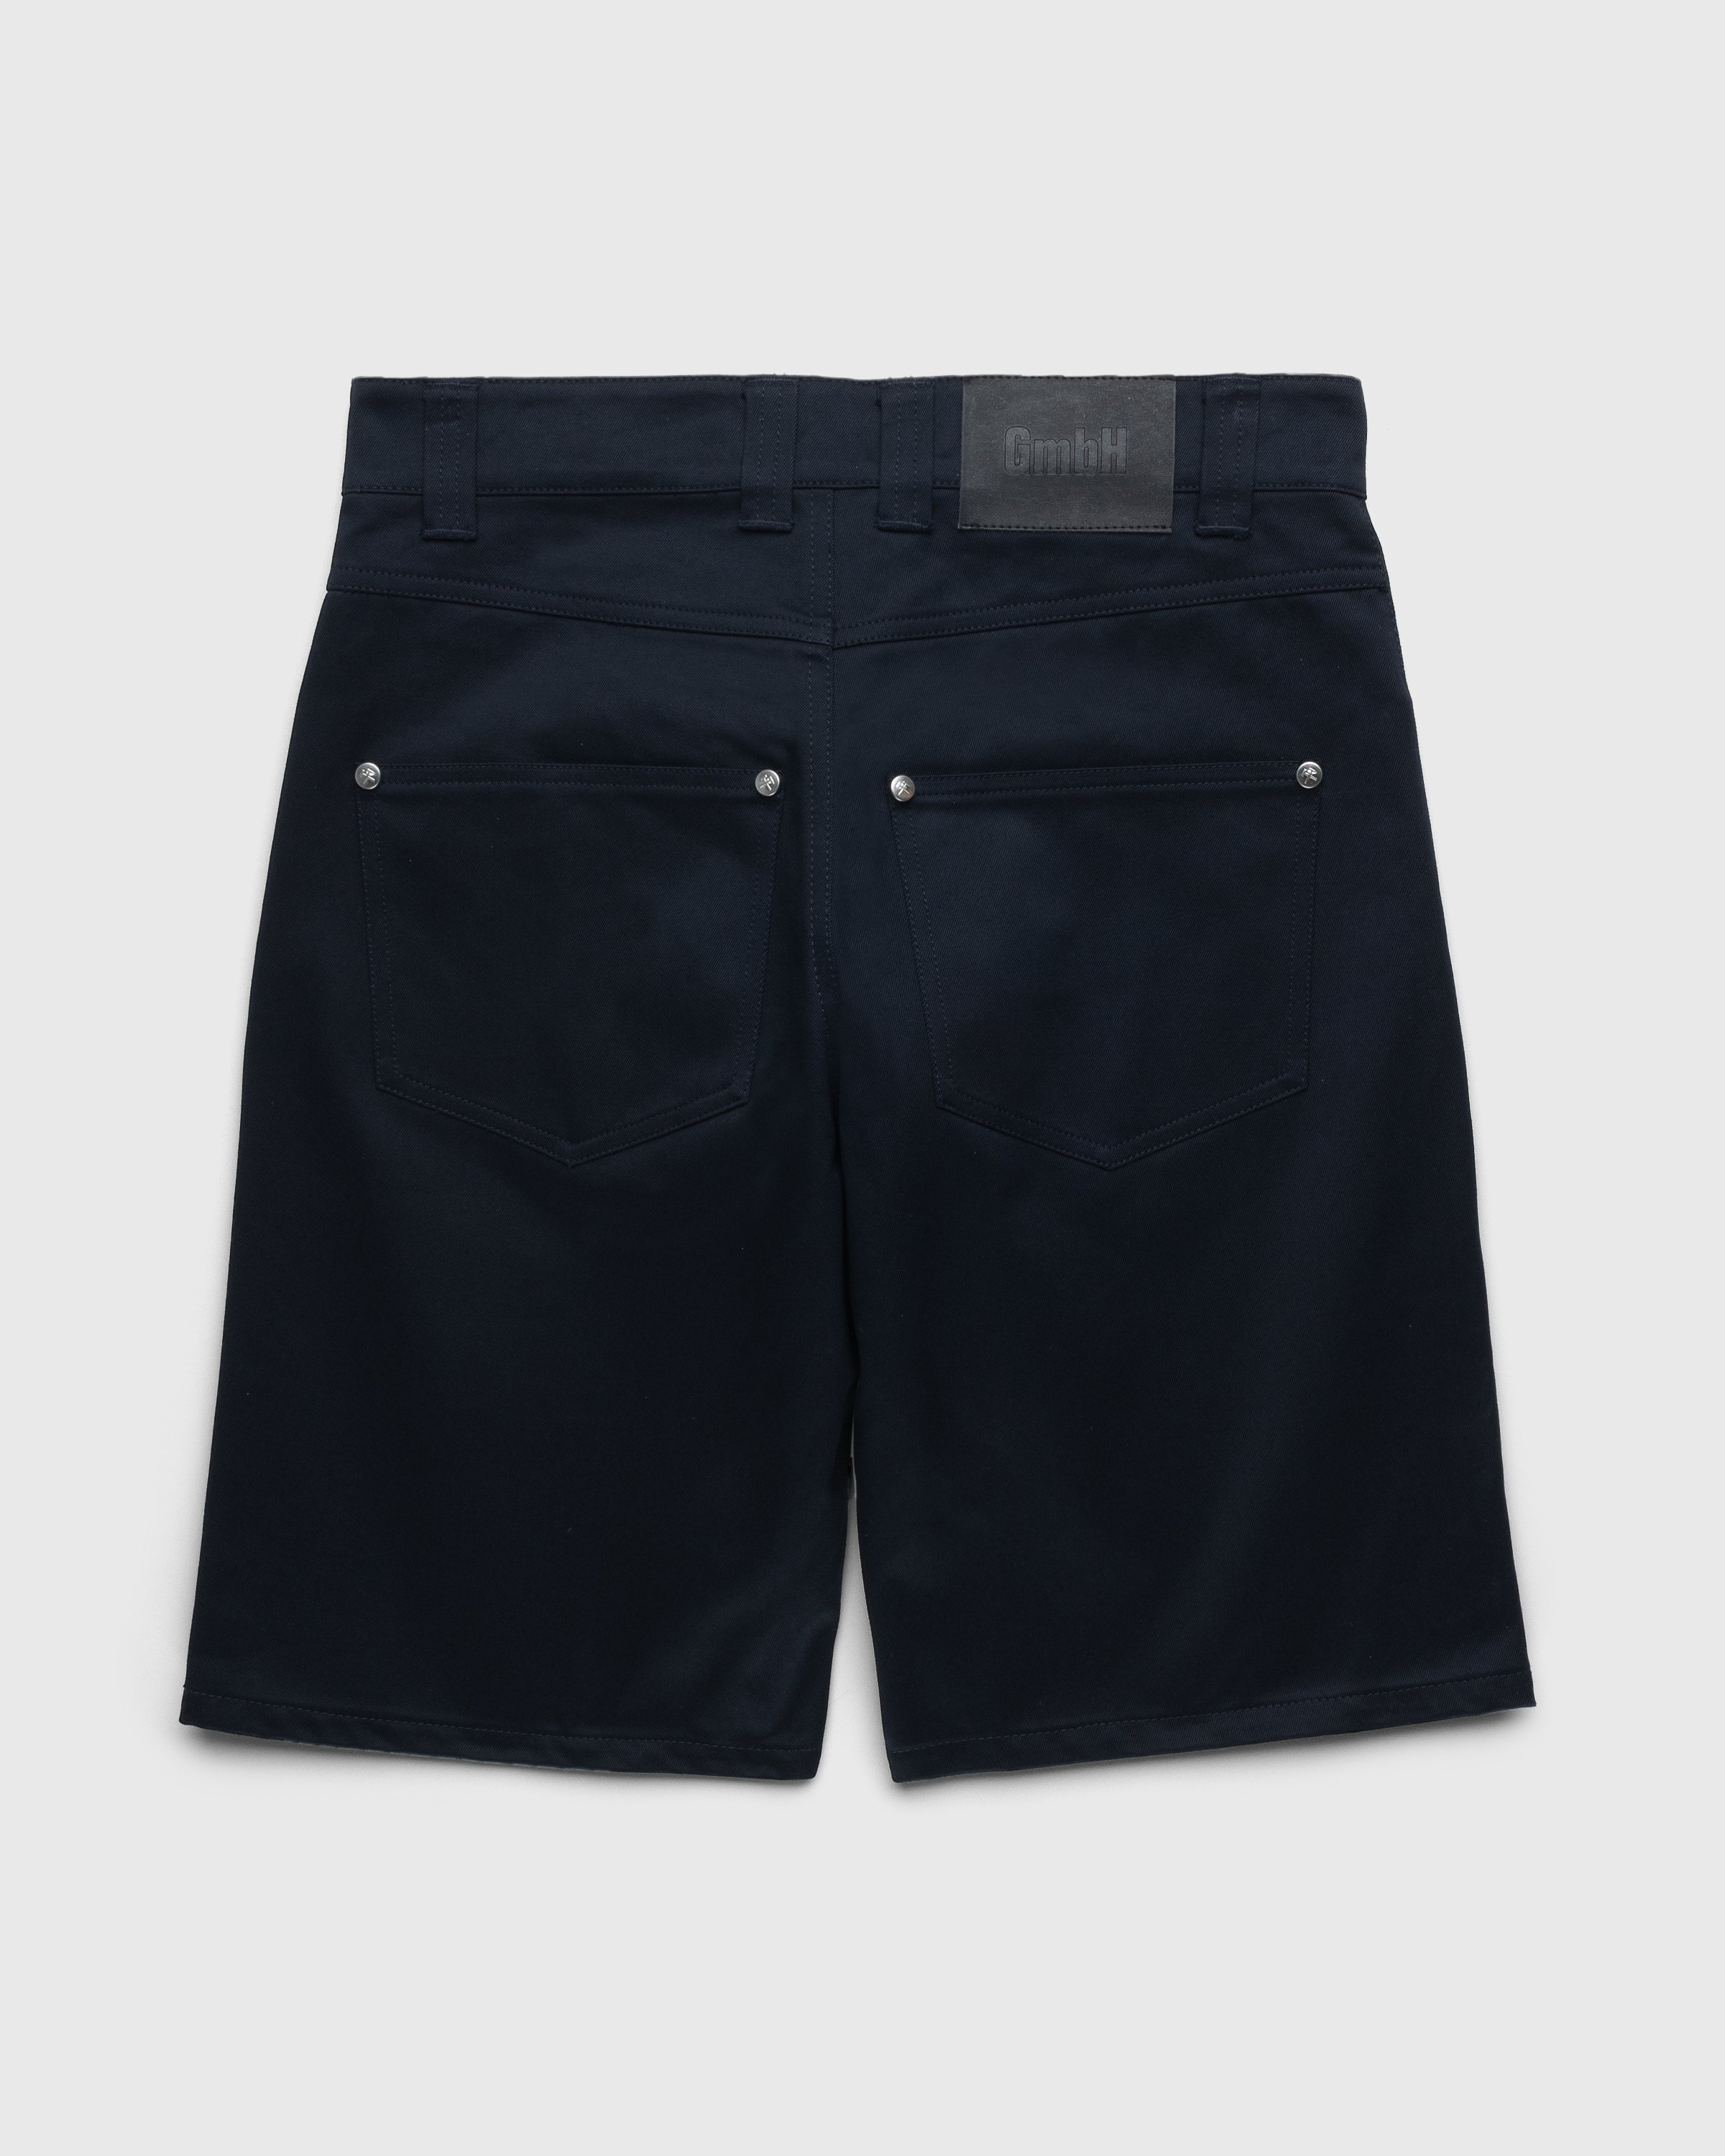 GmbH – Amir Double Zip Shorts Navy | Highsnobiety Shop